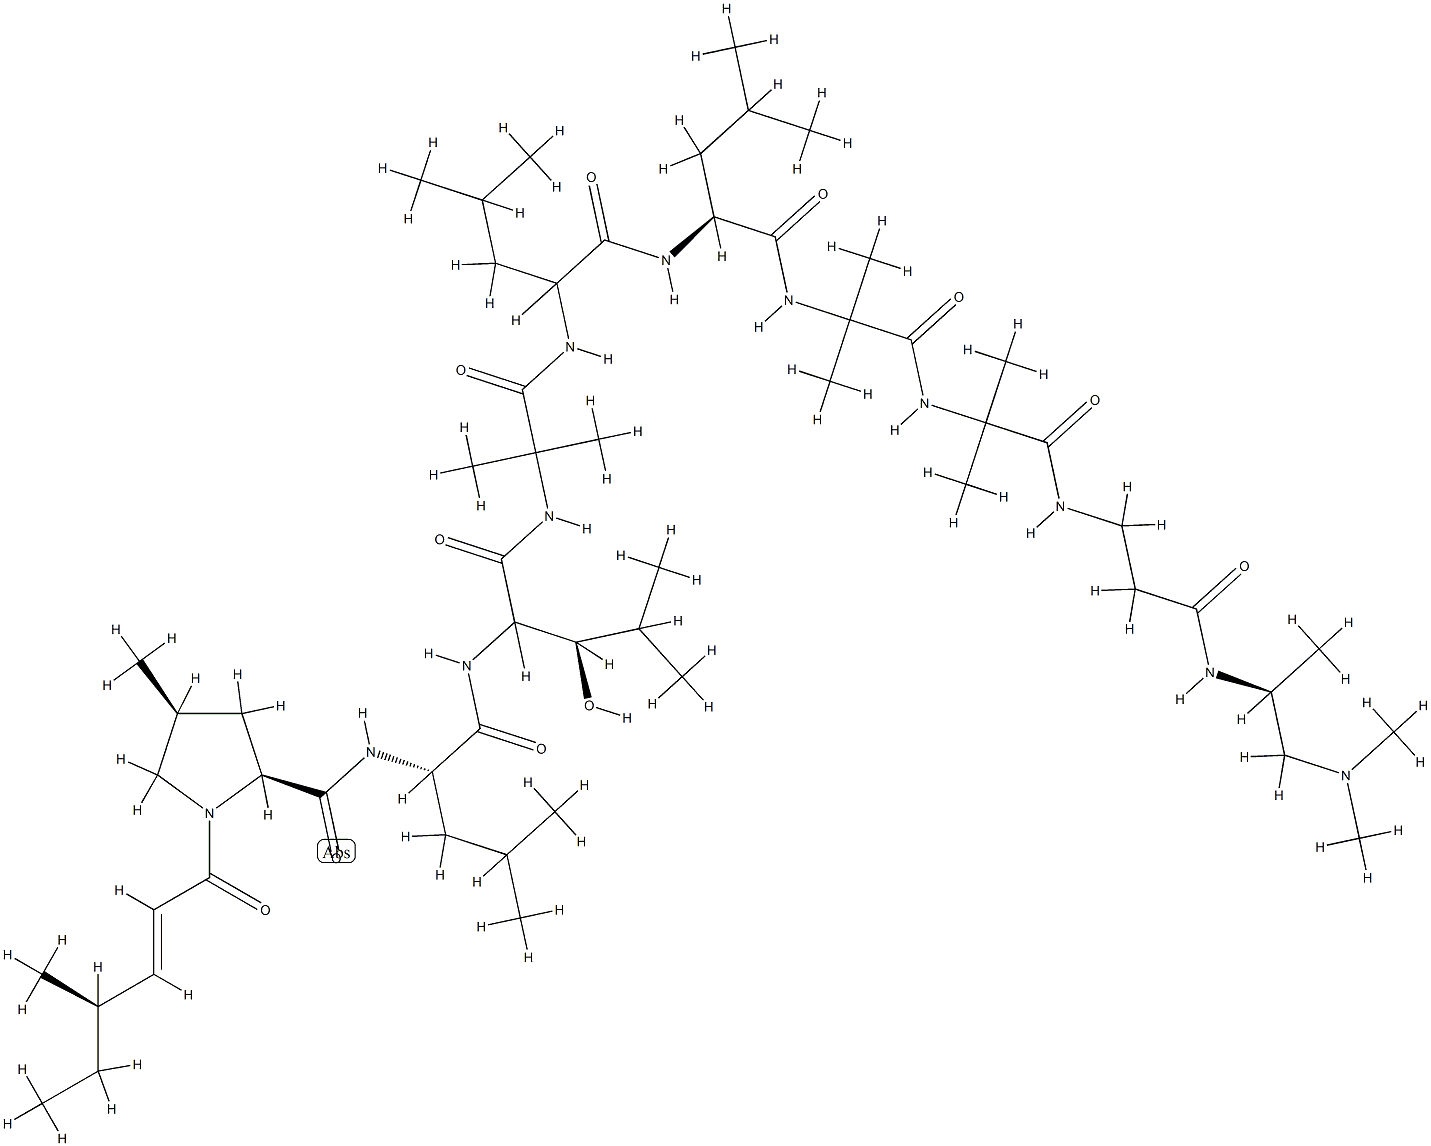 1-[4-Methyl-2-hexenoyl]-L-Pro-L-Leu-4,4-dimethyl-L-Thr-2-methyl Ala-L-Leu-L-Leu-2-methyl Ala-2-methyl Ala-βAla-[1-methyl-2-(methylamino)ethyl]NH2